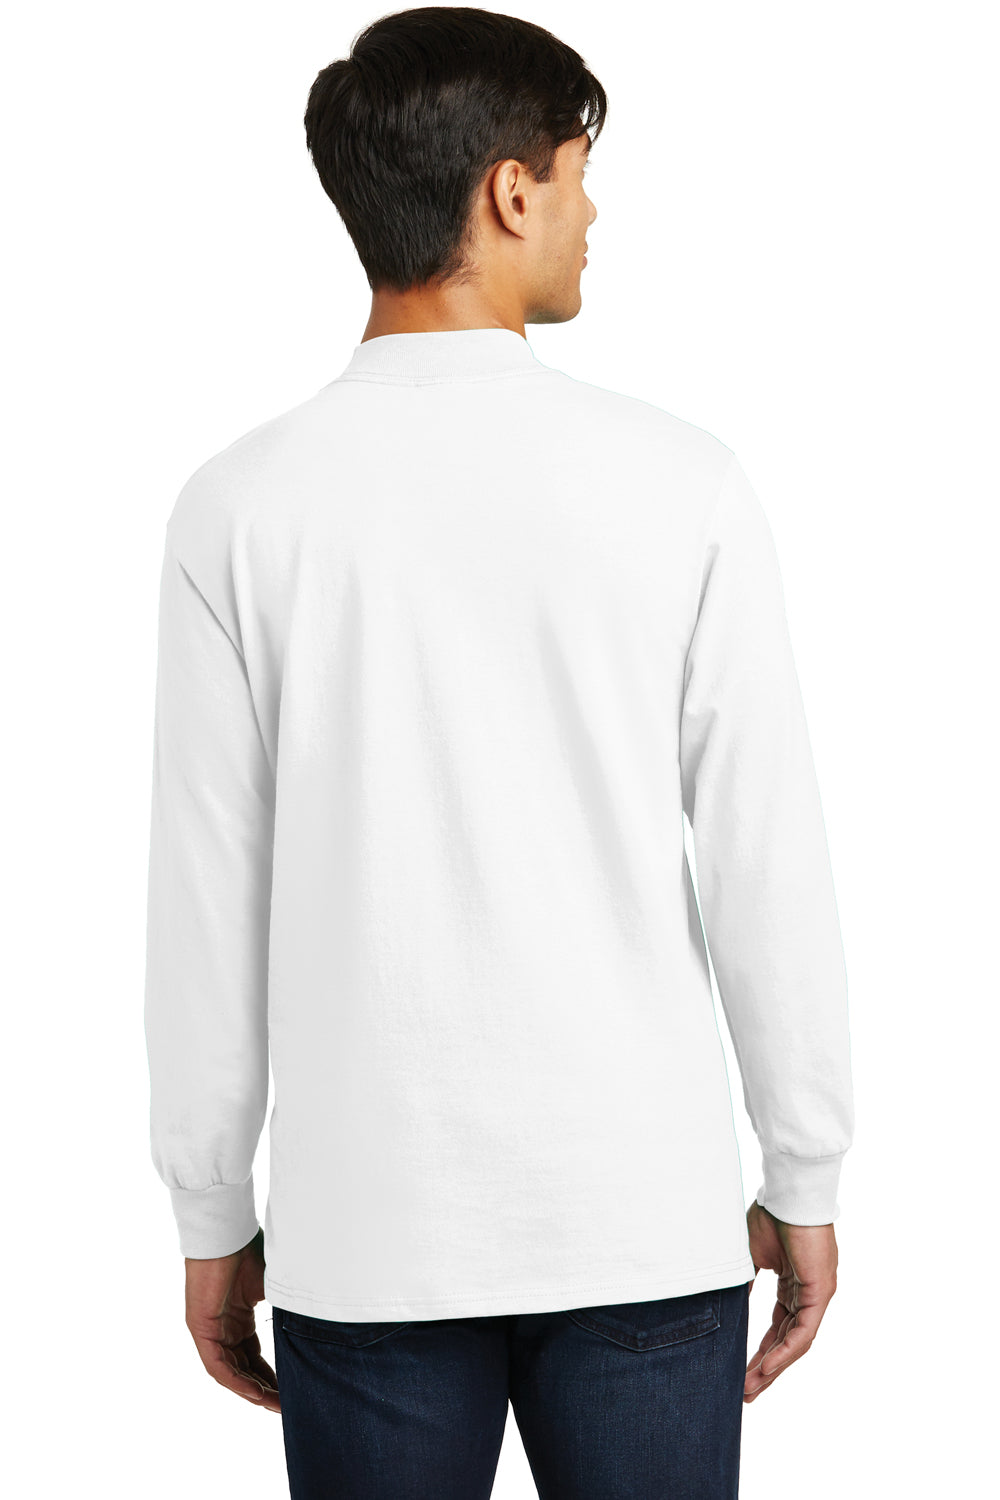 Port & Company PC61M Mens Essential Long Sleeve Mock Neck T-Shirt White Back